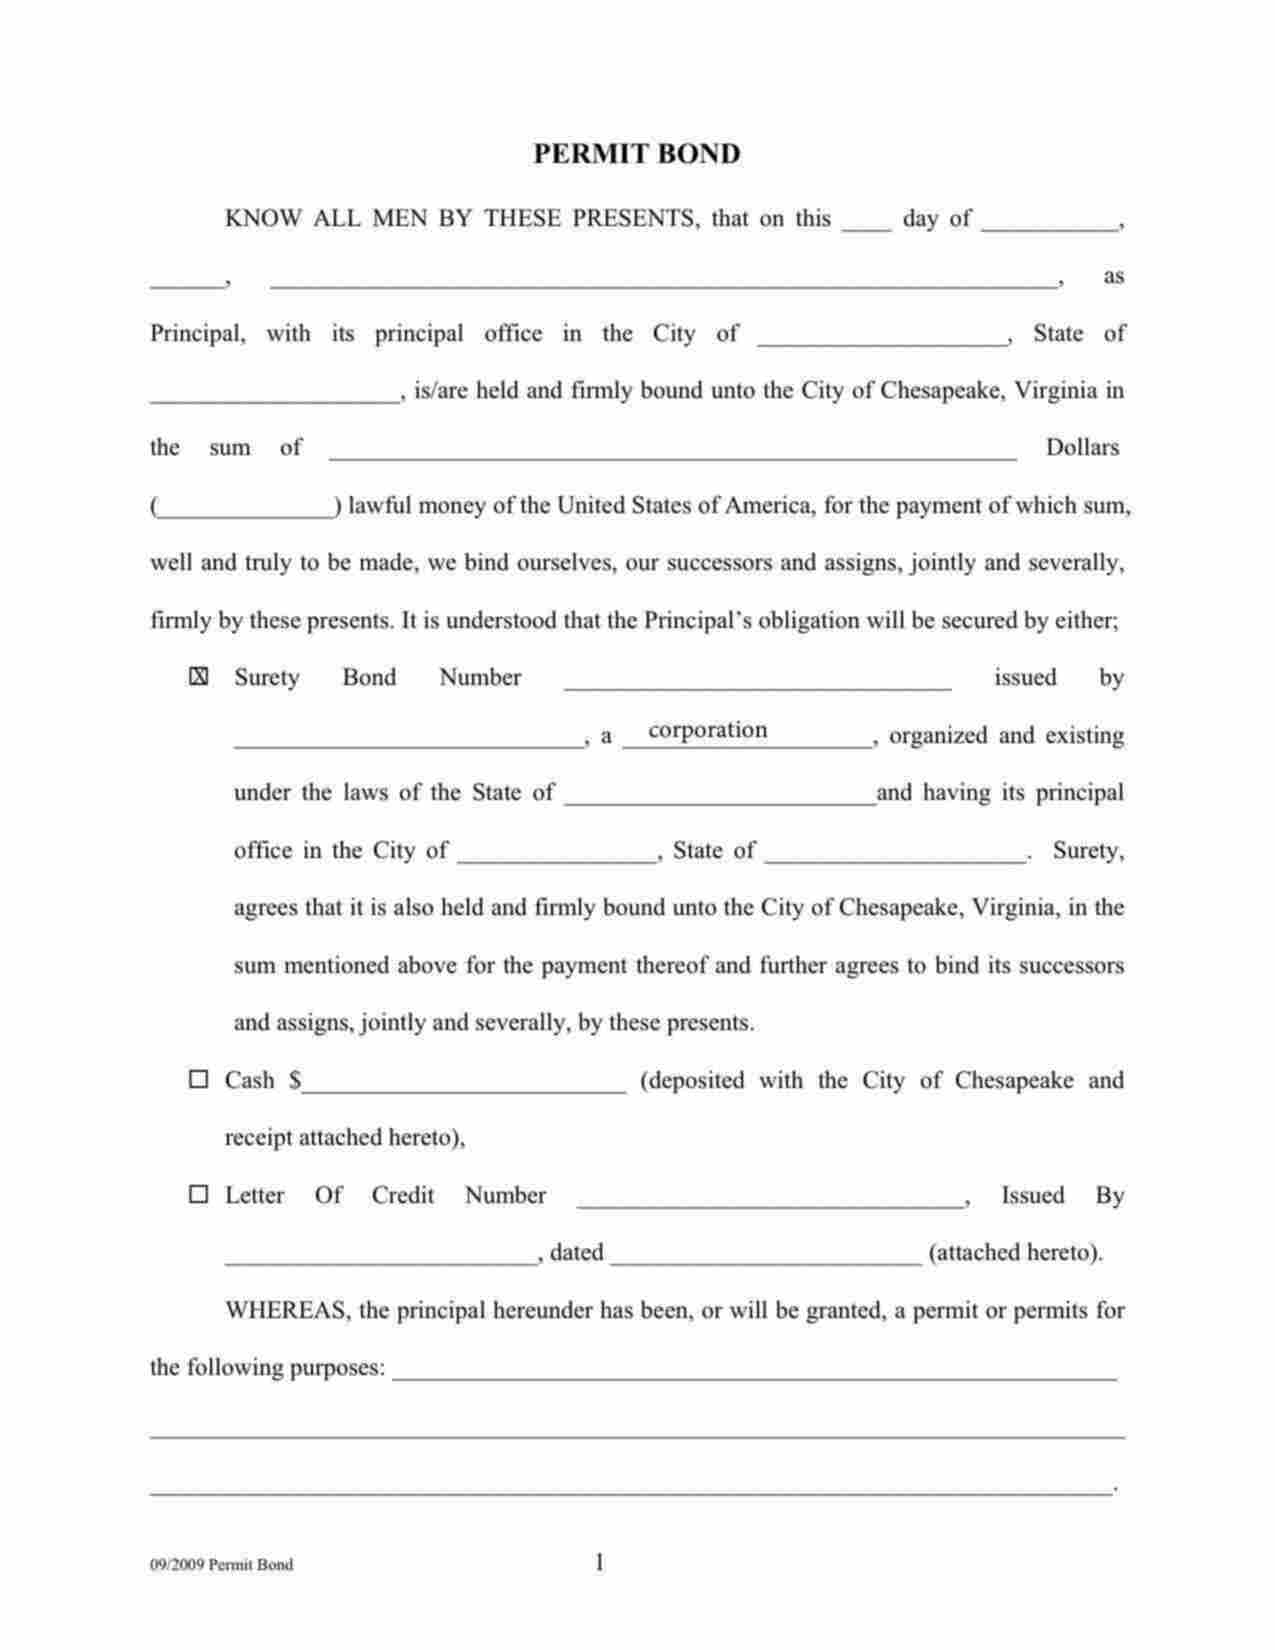 Virginia Permit Bond Form